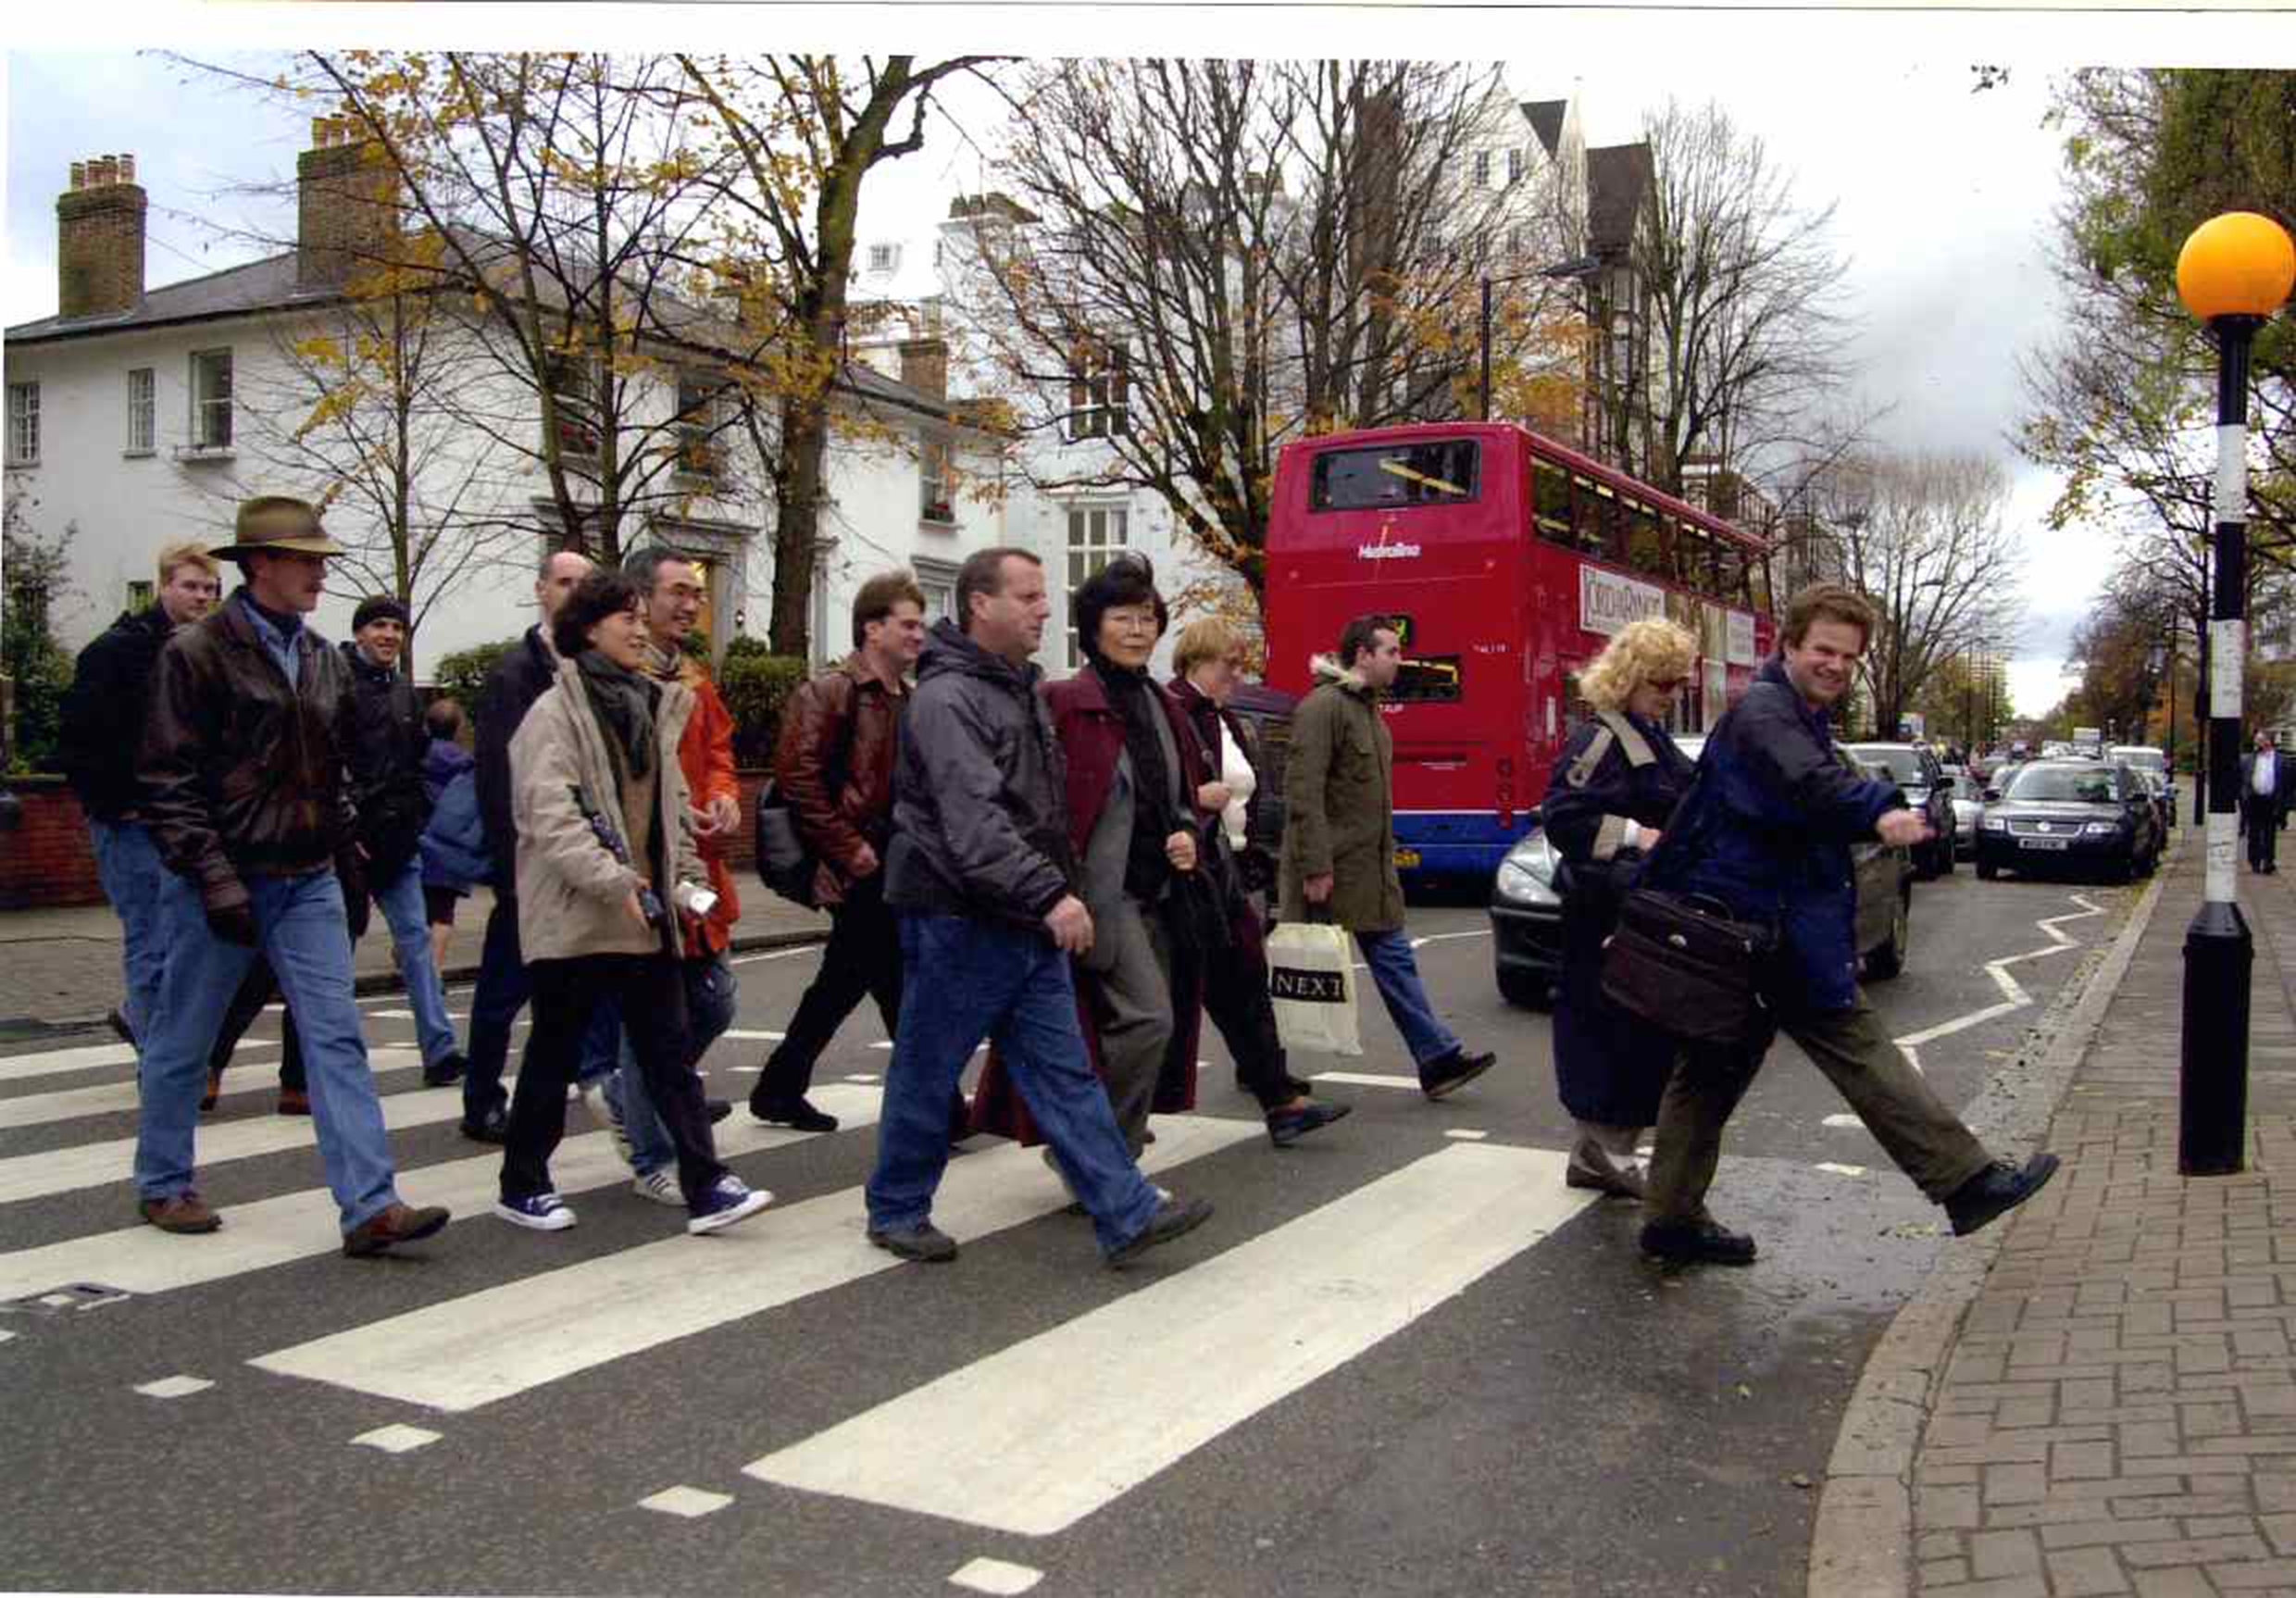 London Beatles tour crossing Abbey Road